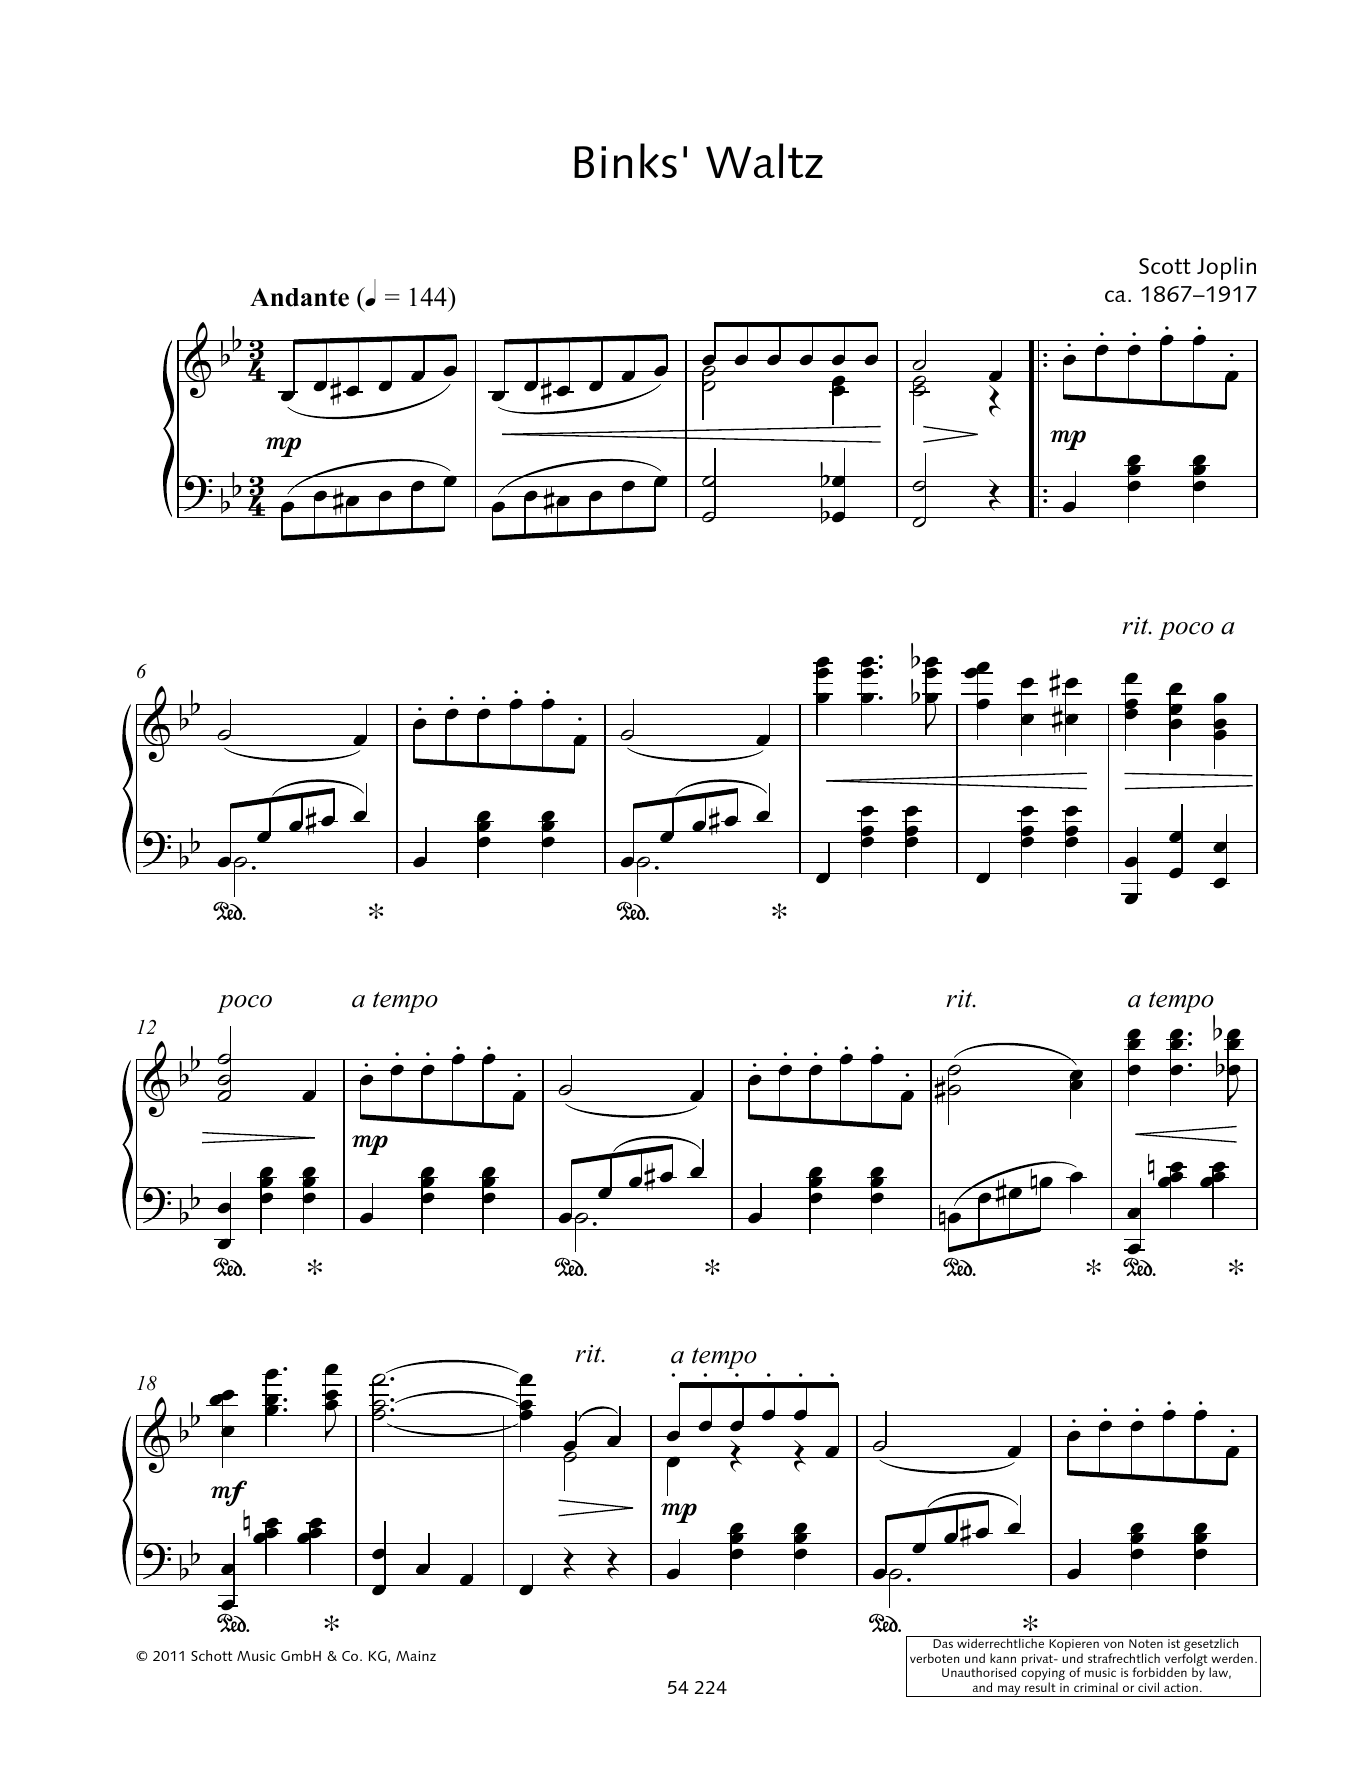 Wolfgang Birtel Binks' Waltz Sheet Music Notes & Chords for Piano Solo - Download or Print PDF